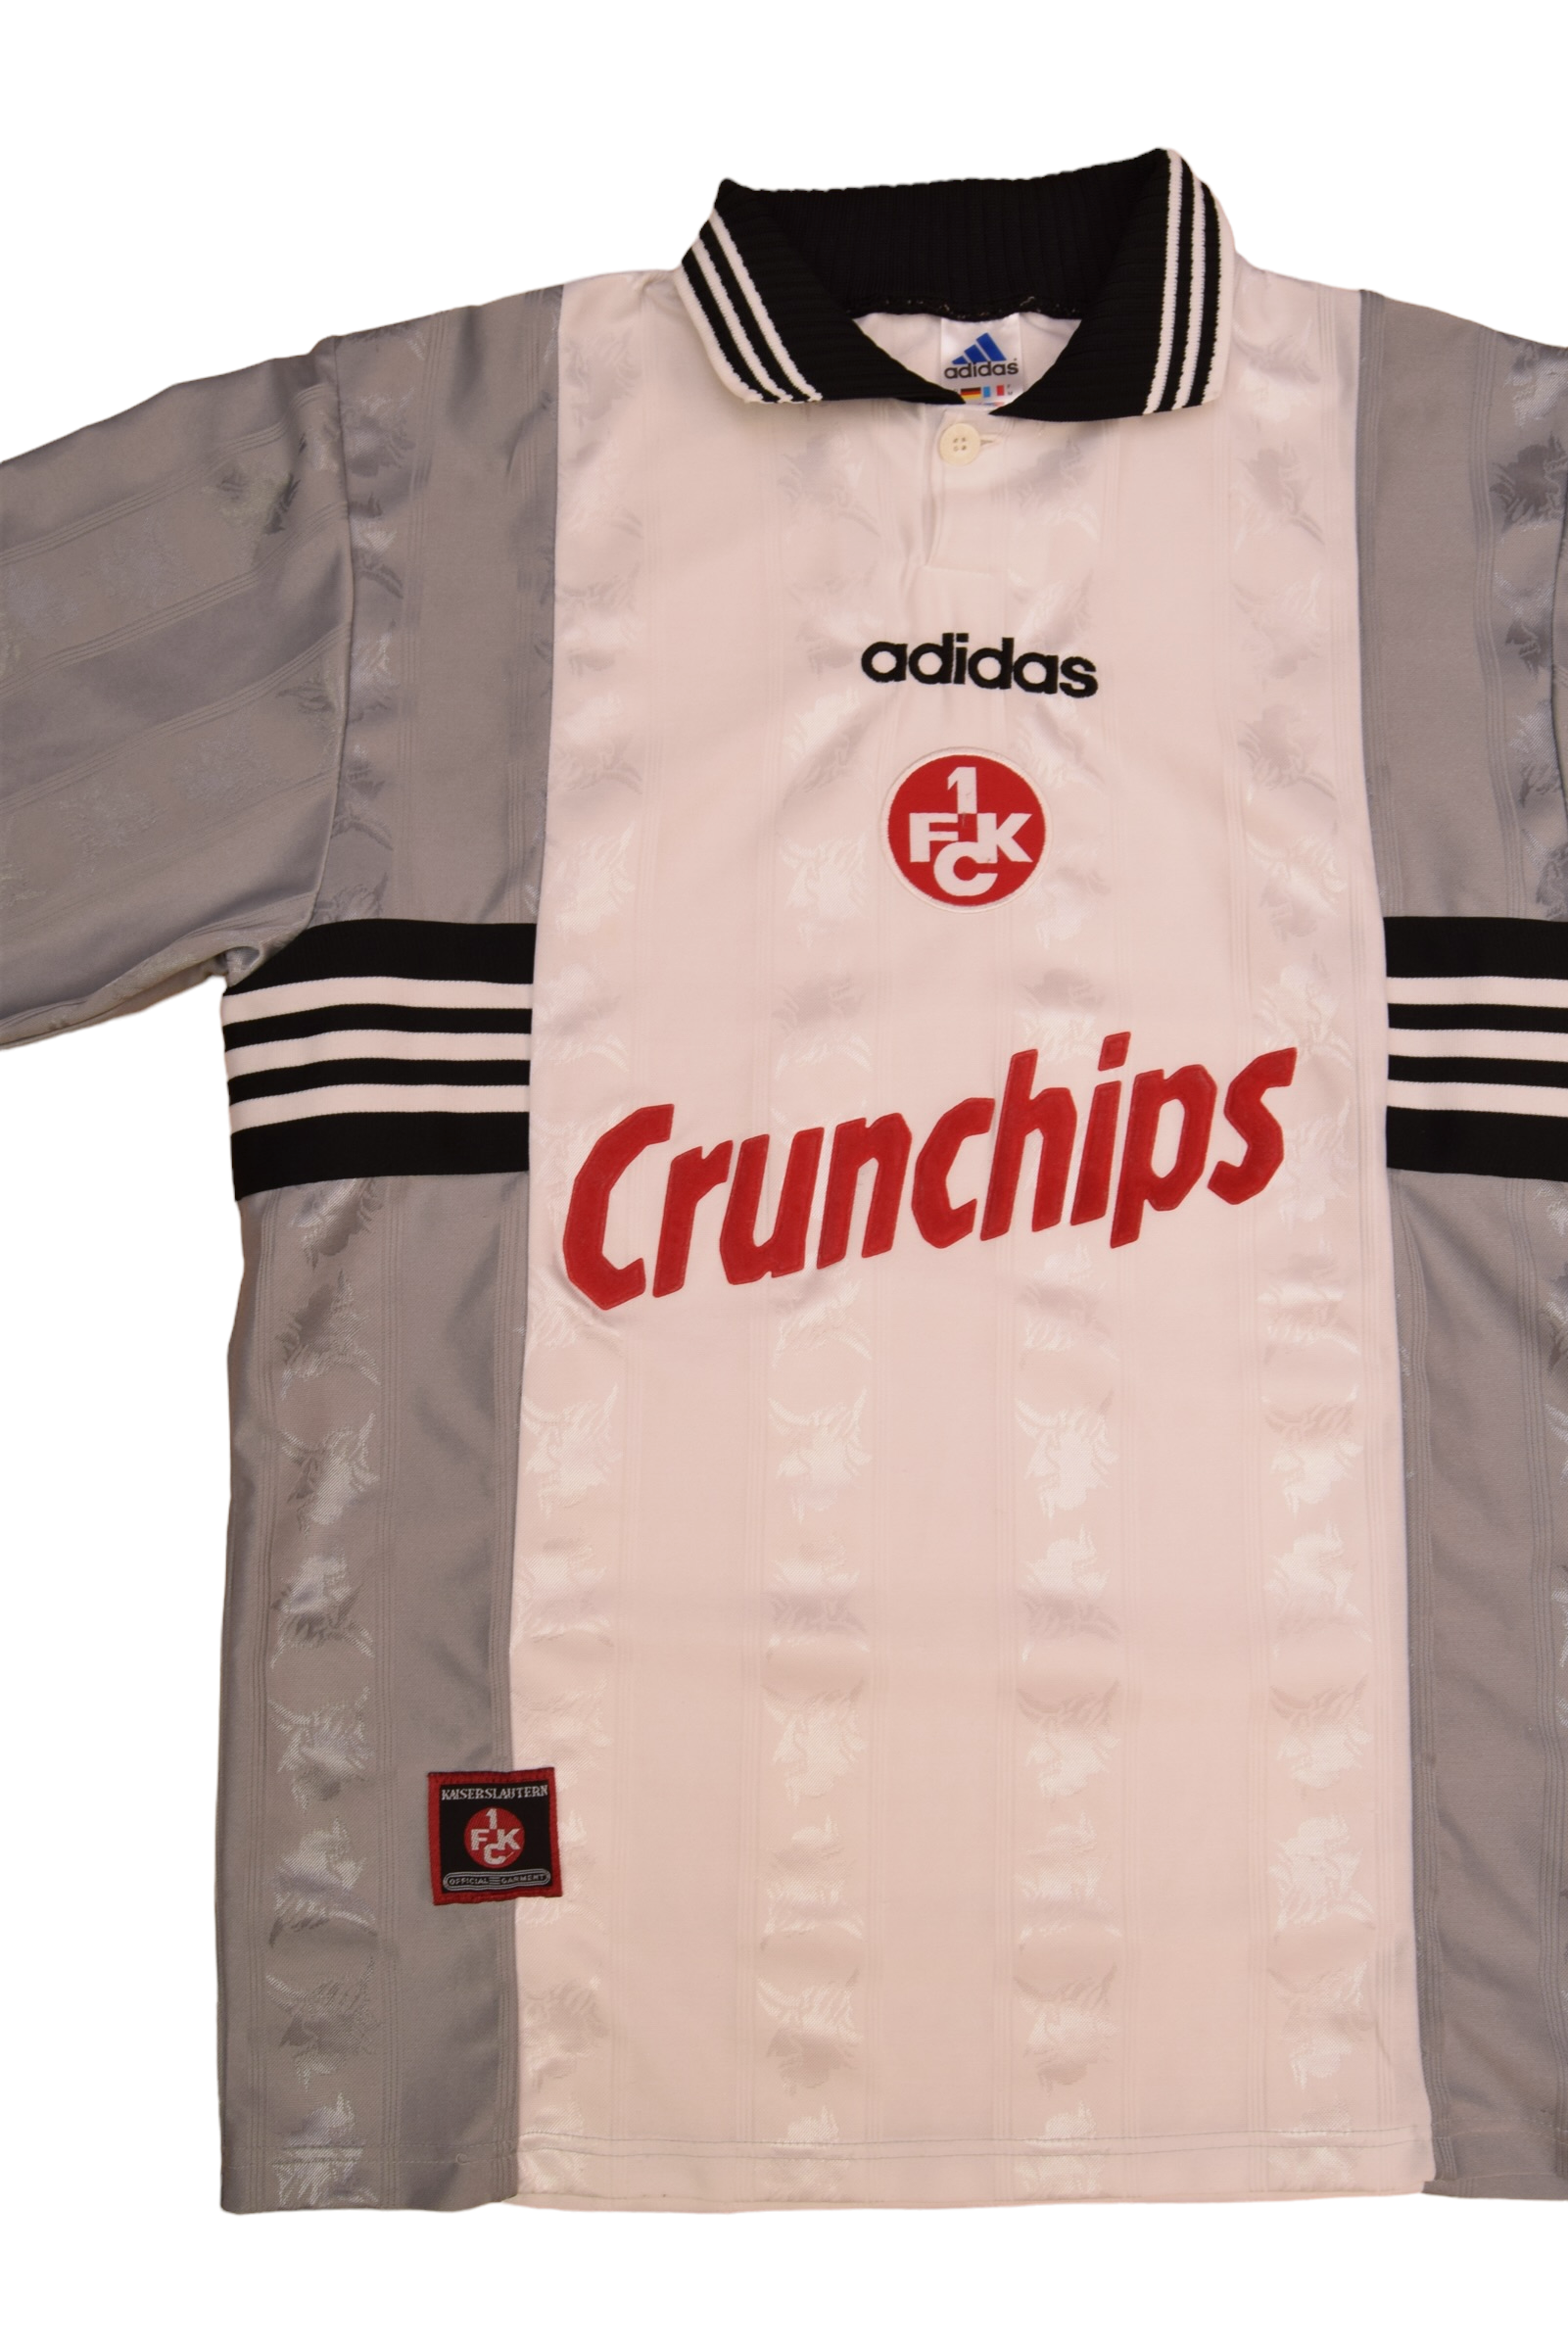 Kaiserslautern FCK Adidas 1996 - 1997 - 1998 Away Football Shirt Grey White Size M Crunchips